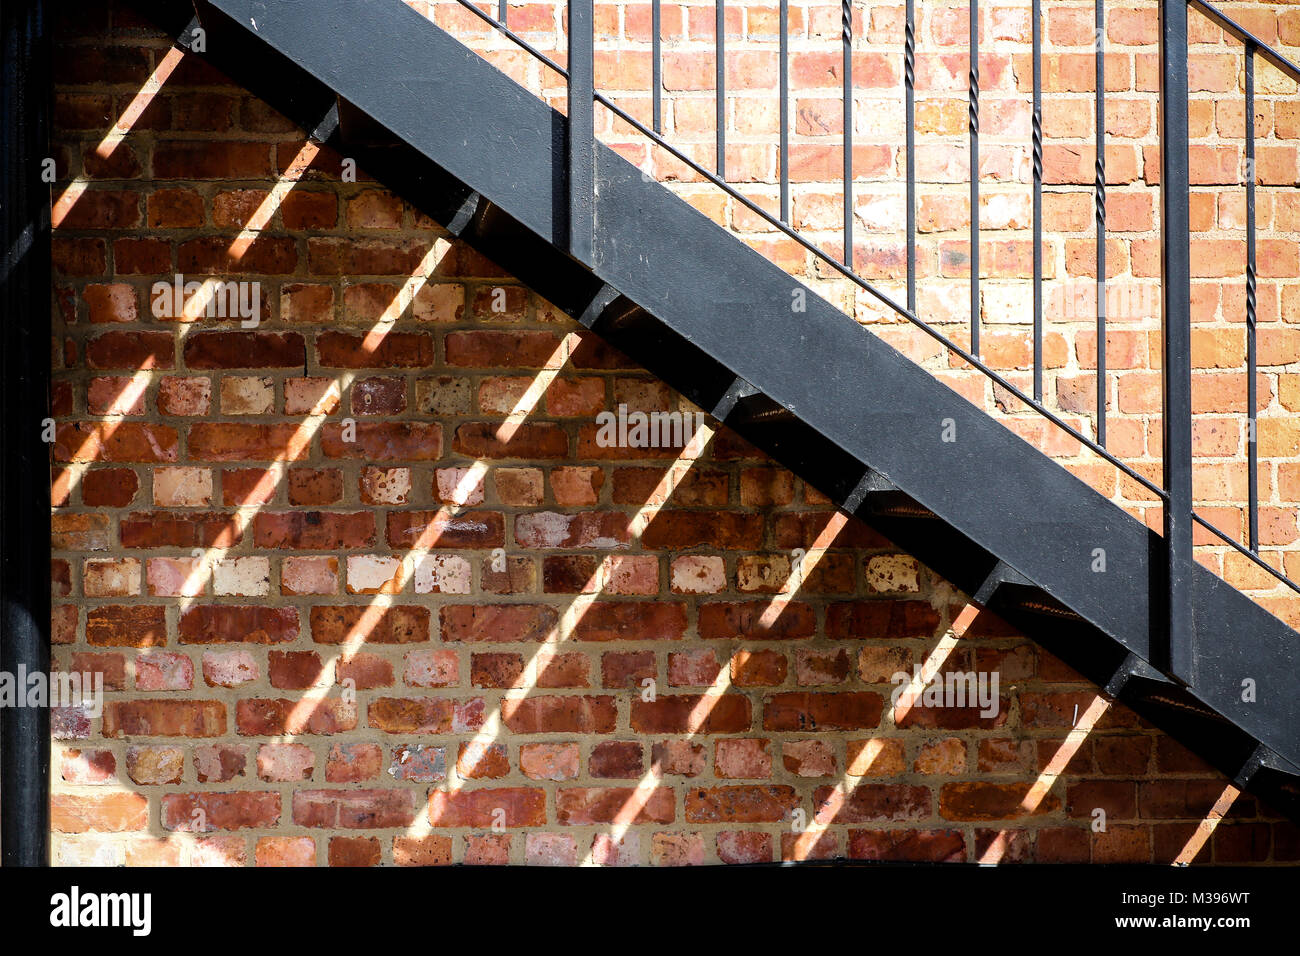 A fire escape cast geometric shadows onto a red brick wall Stock Photo